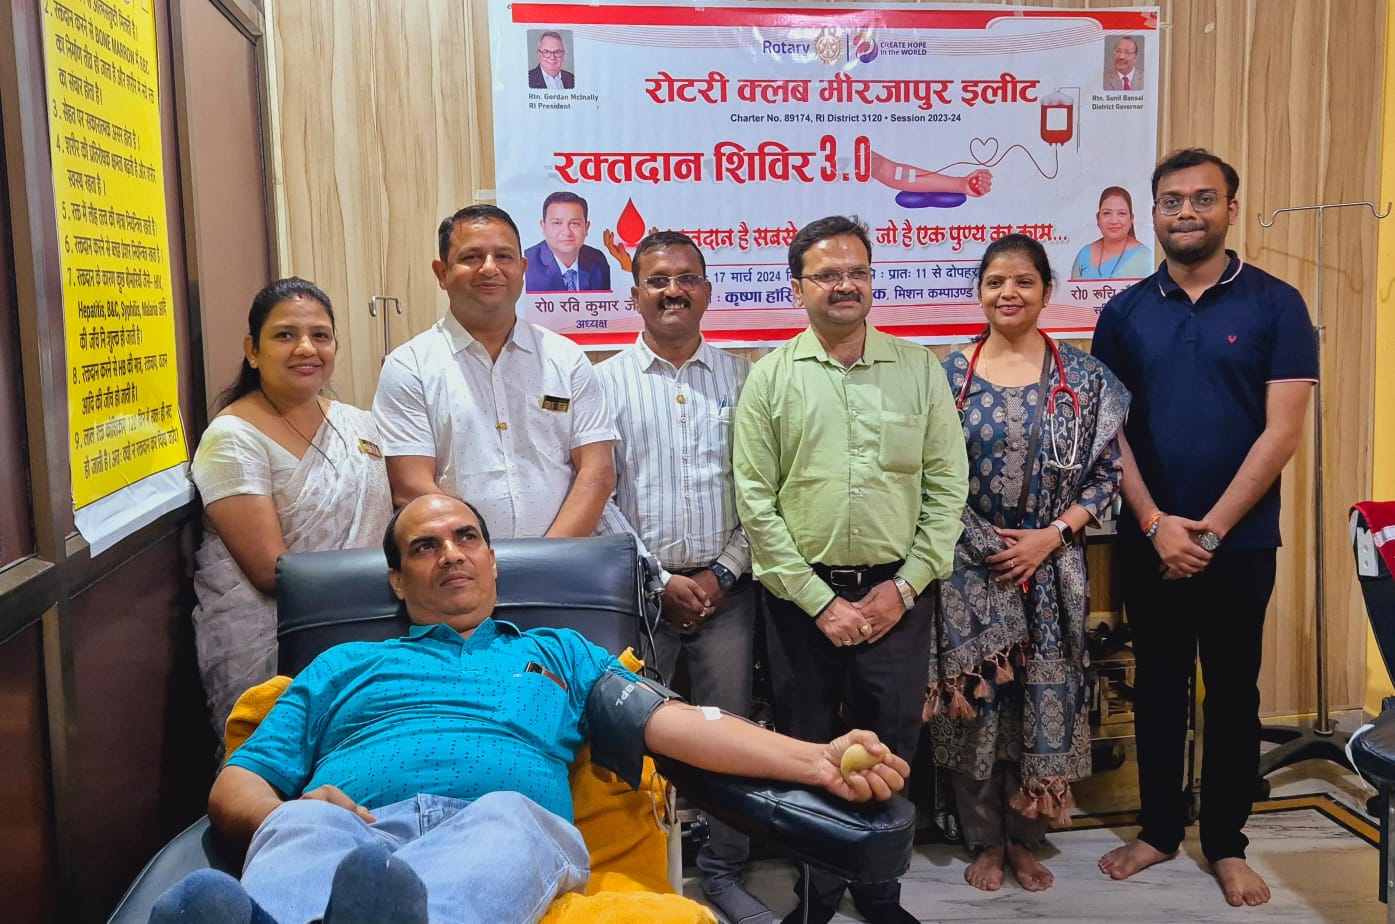 रोटरी क्लब मिर्जापुर इलीट के रक्तदान शिविर मे 12 लोगो ने किया रक्तदान